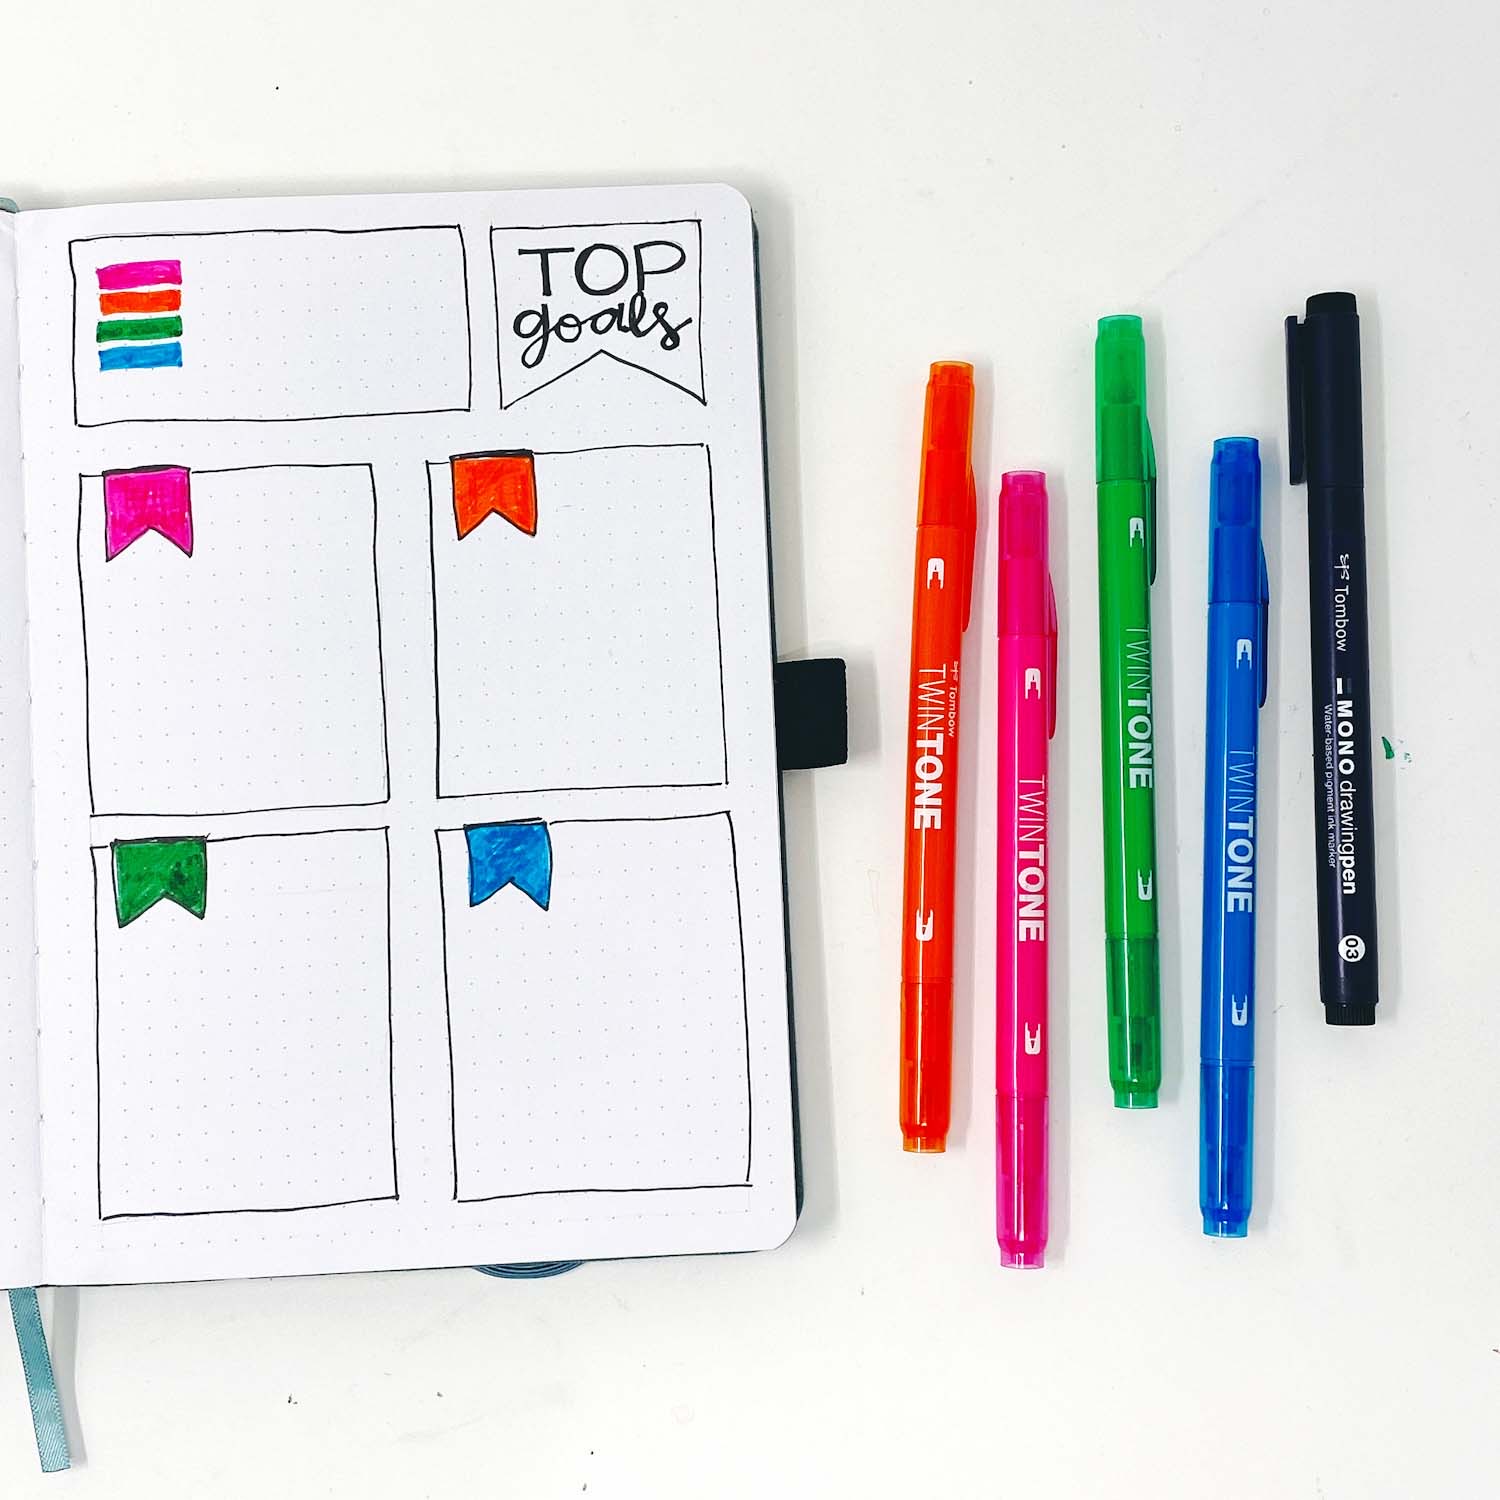 Gift Idea: New Self-Care Journaling Kit - Tombow USA Blog